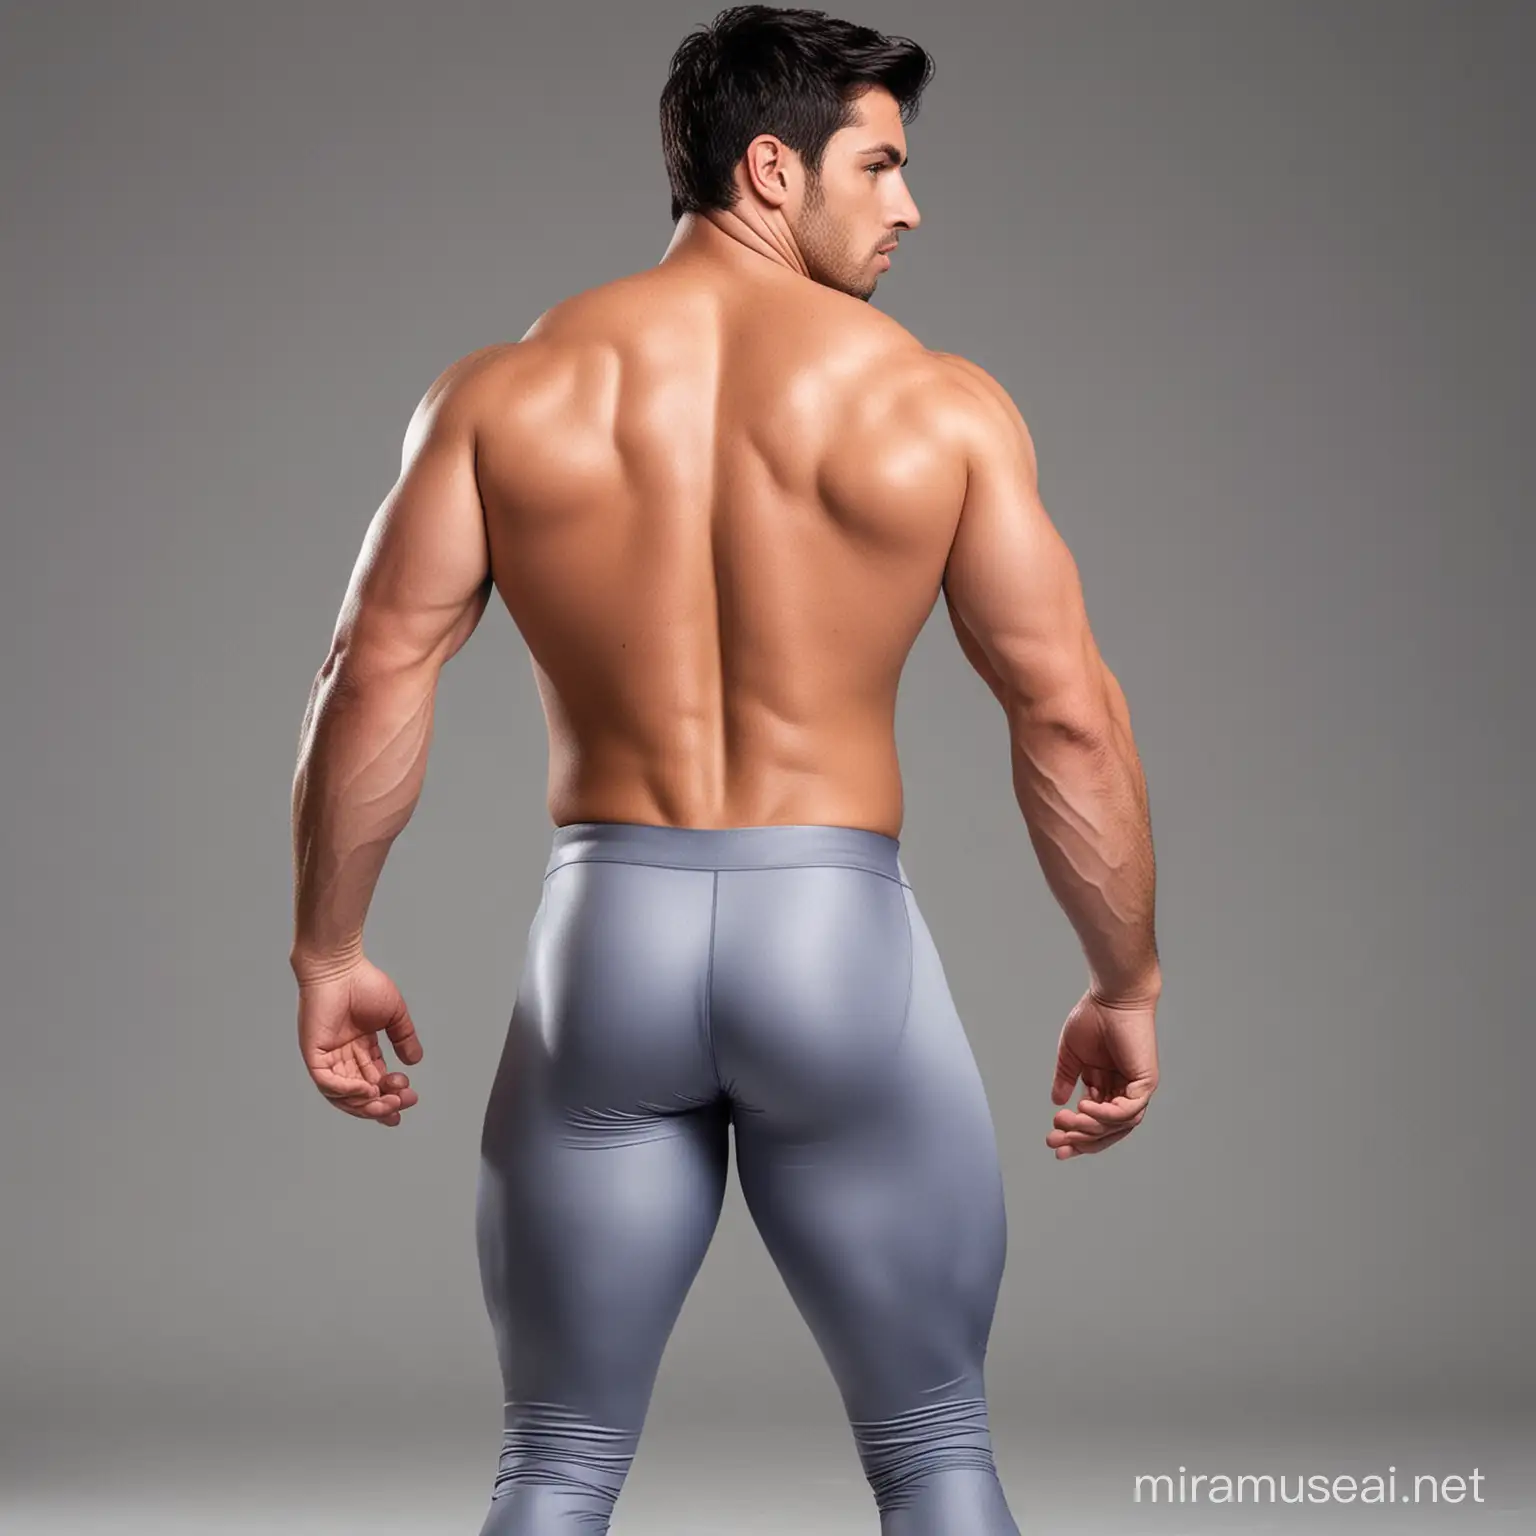 Cartoon Network Style Muscular Argentine Wrestler in Periwinkle Spandex Leggings